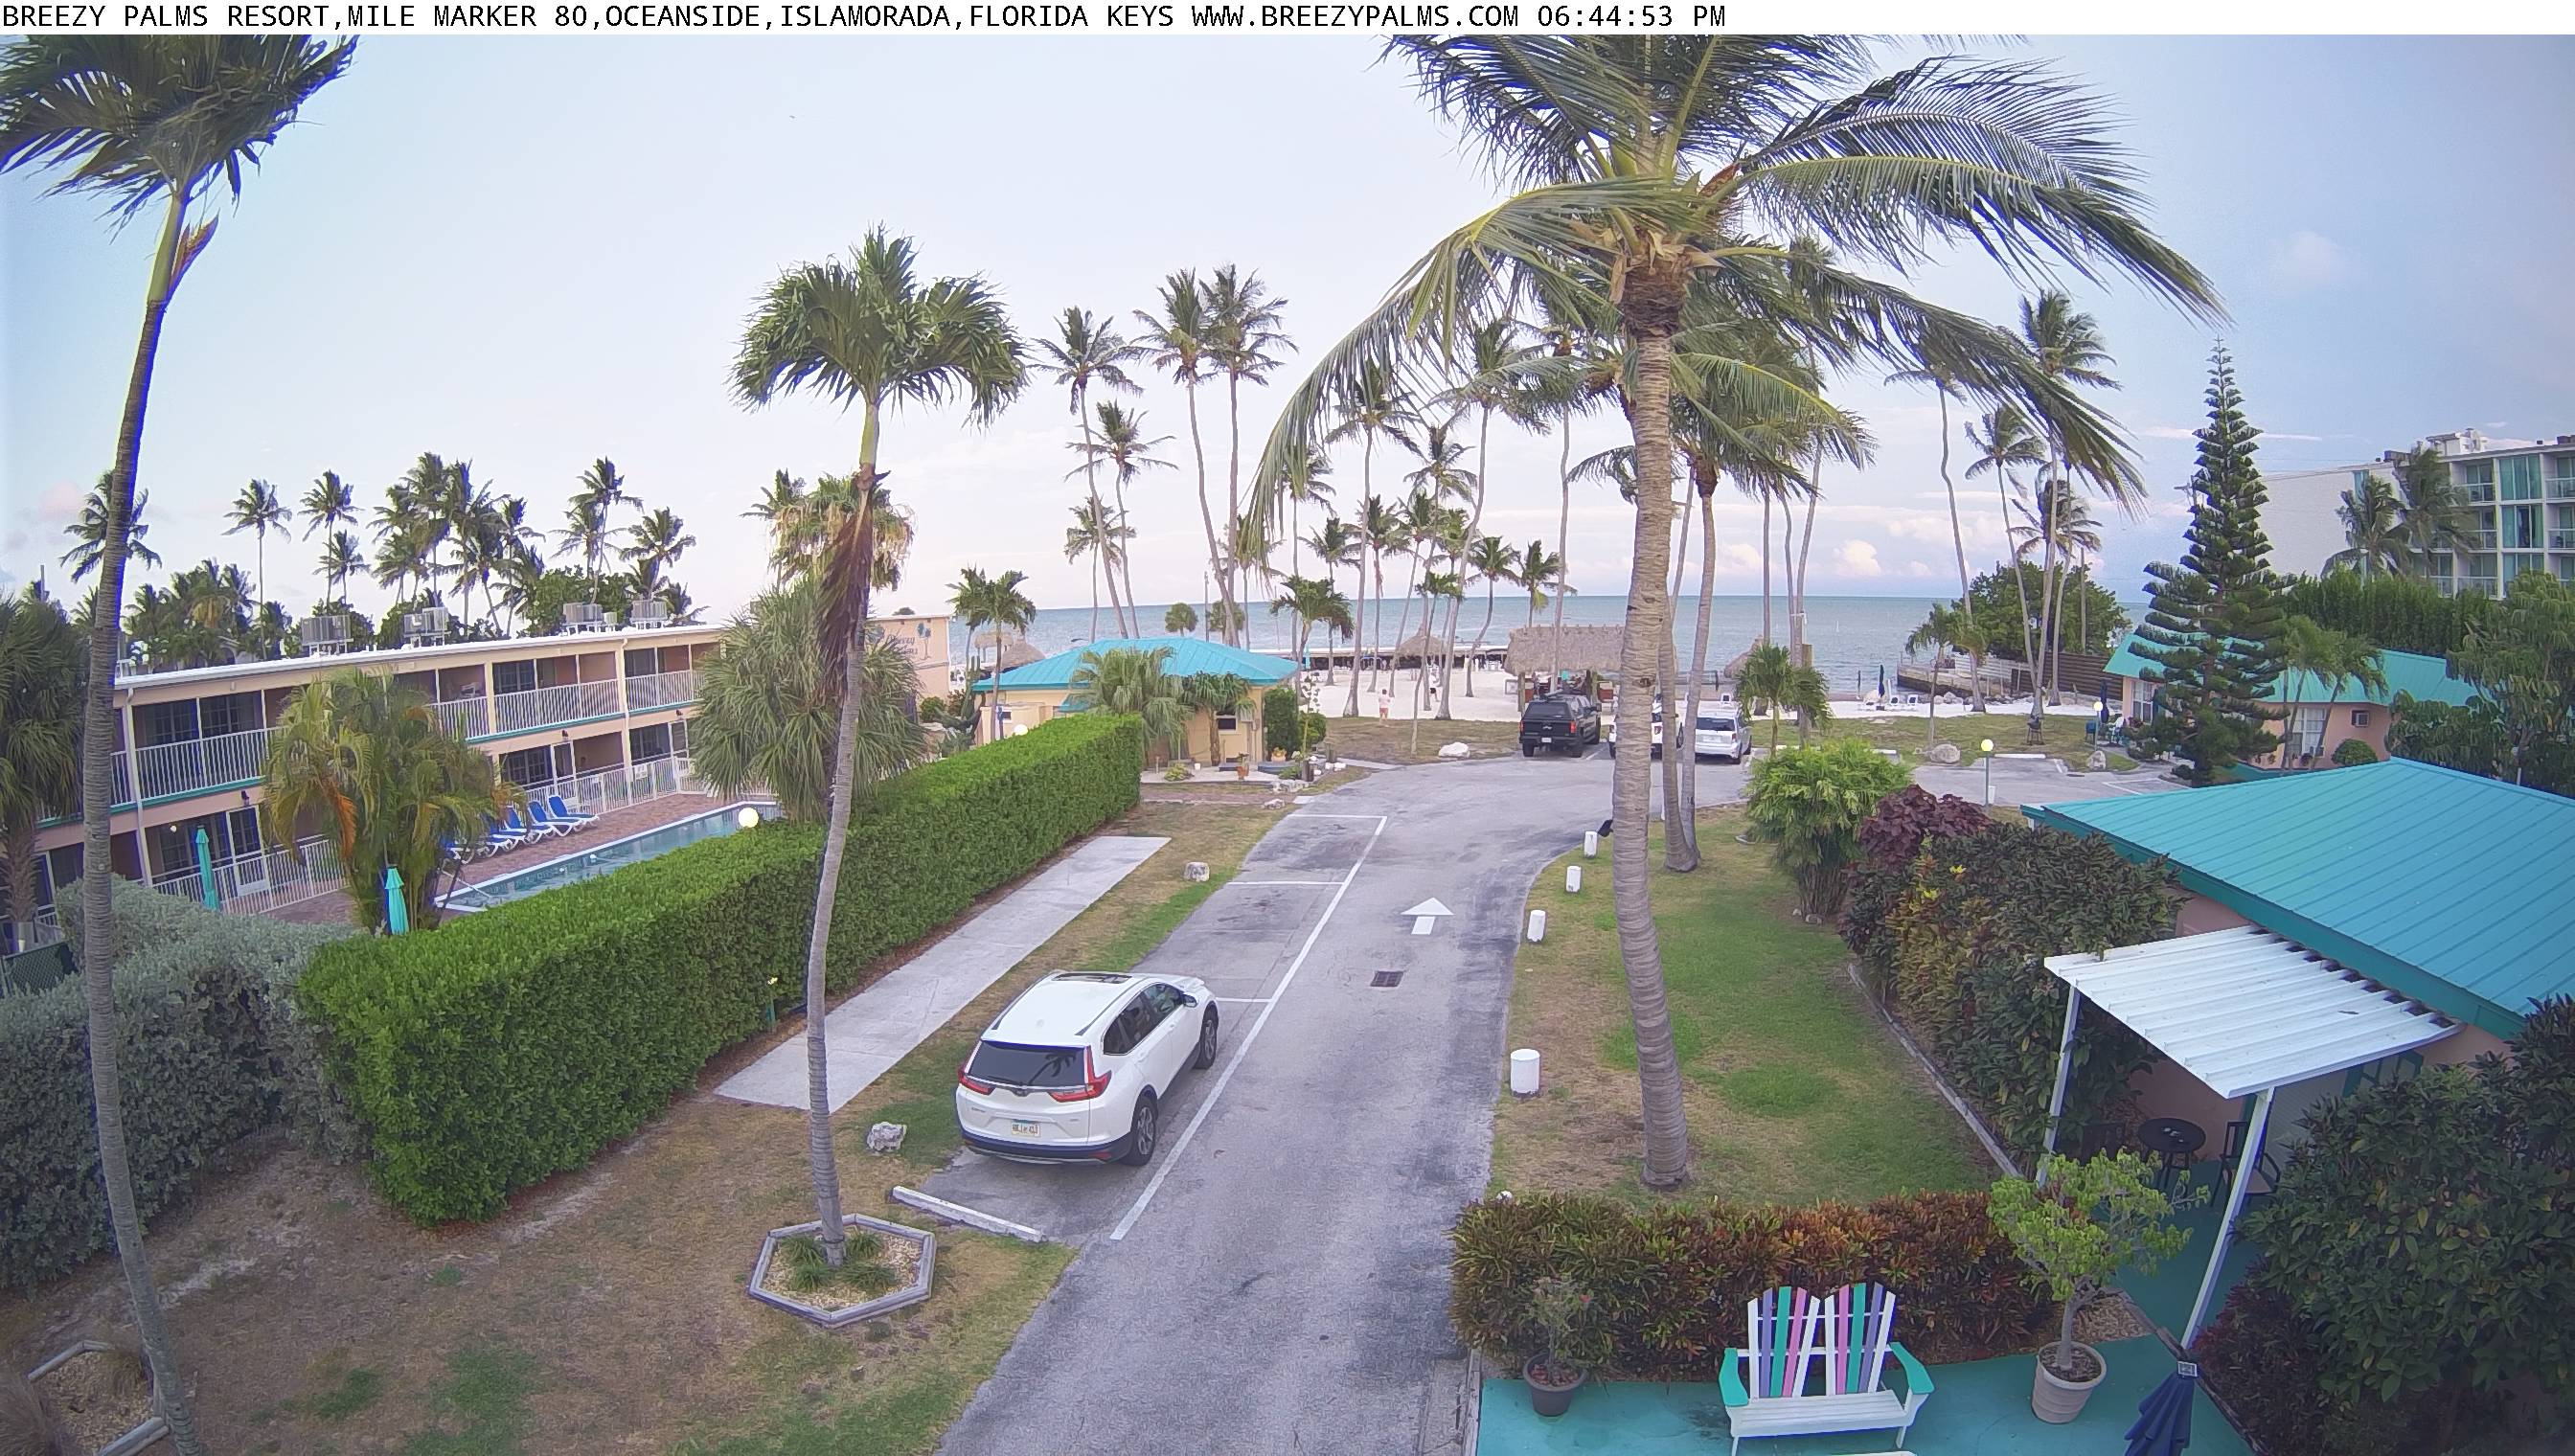 Florida Keys, Breezy Palms Resort in Oceanside - USA